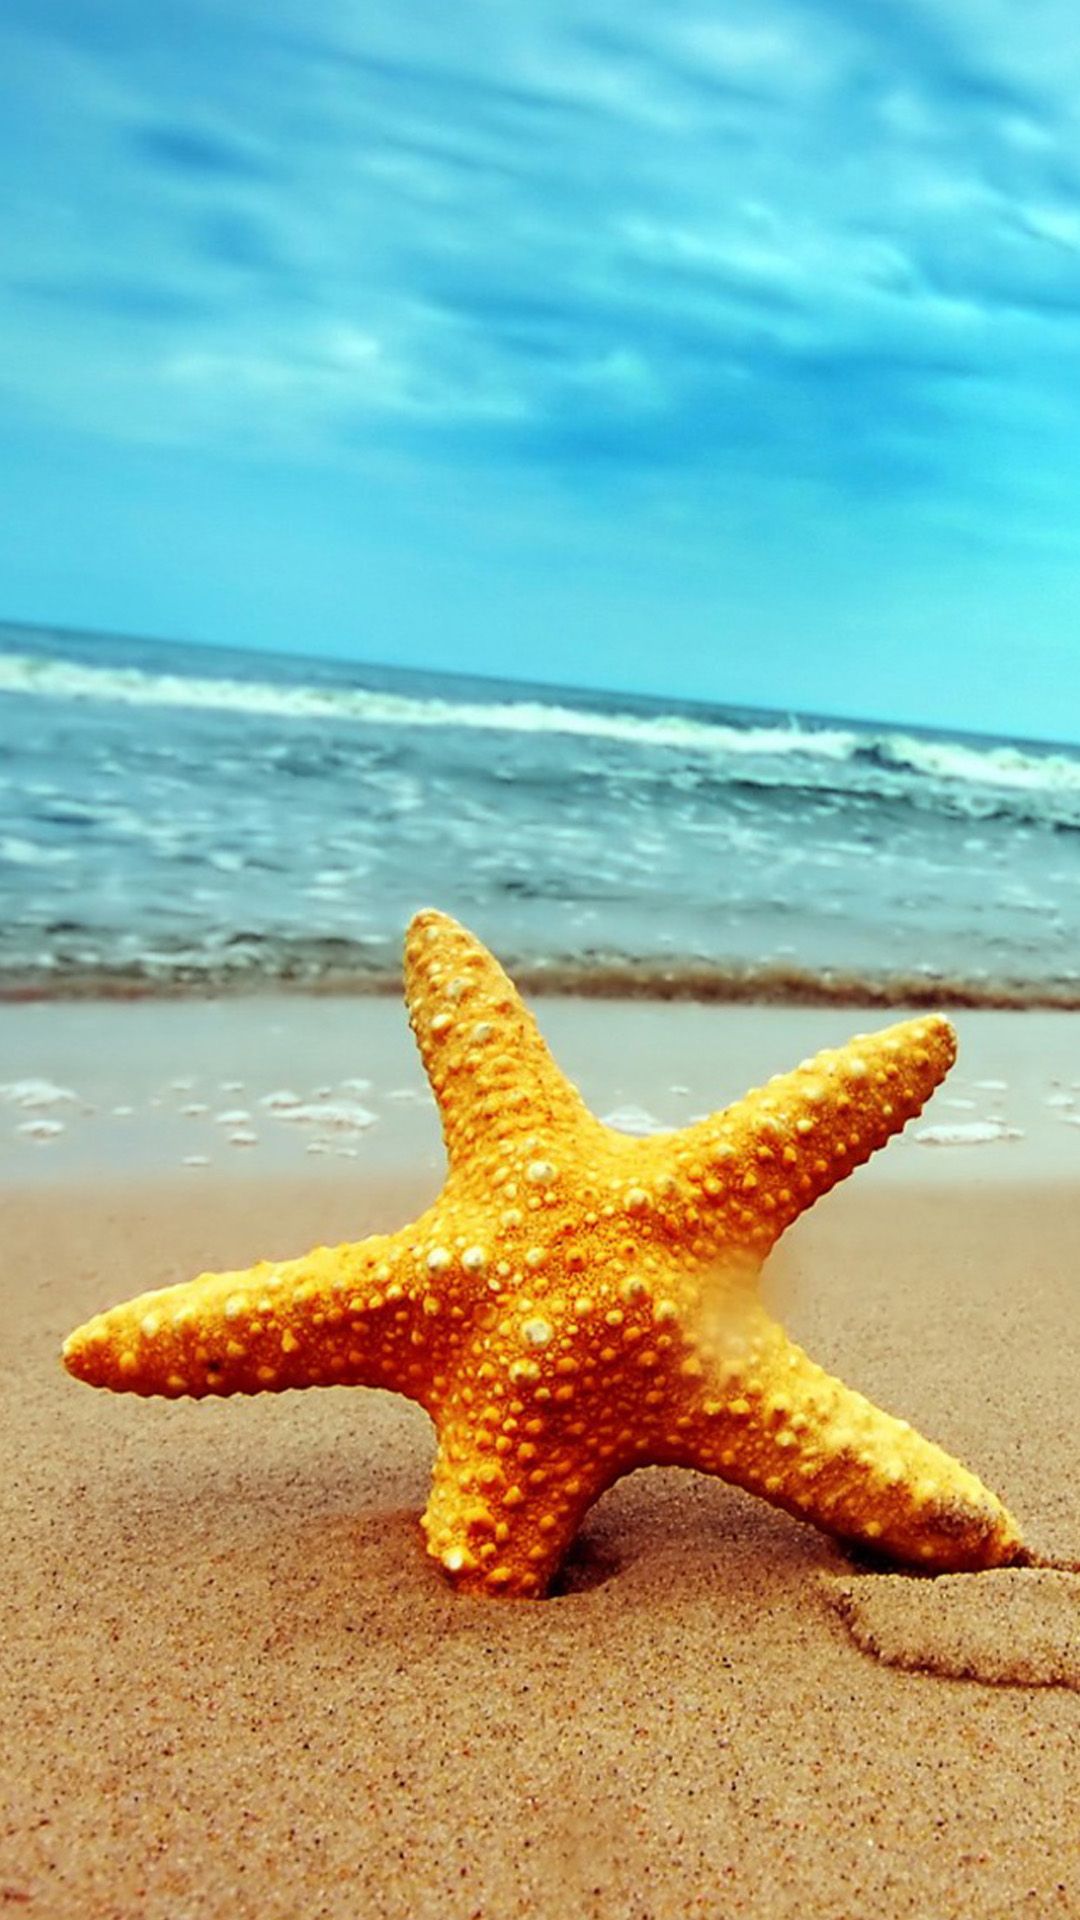 A starfish on the beach - Starfish